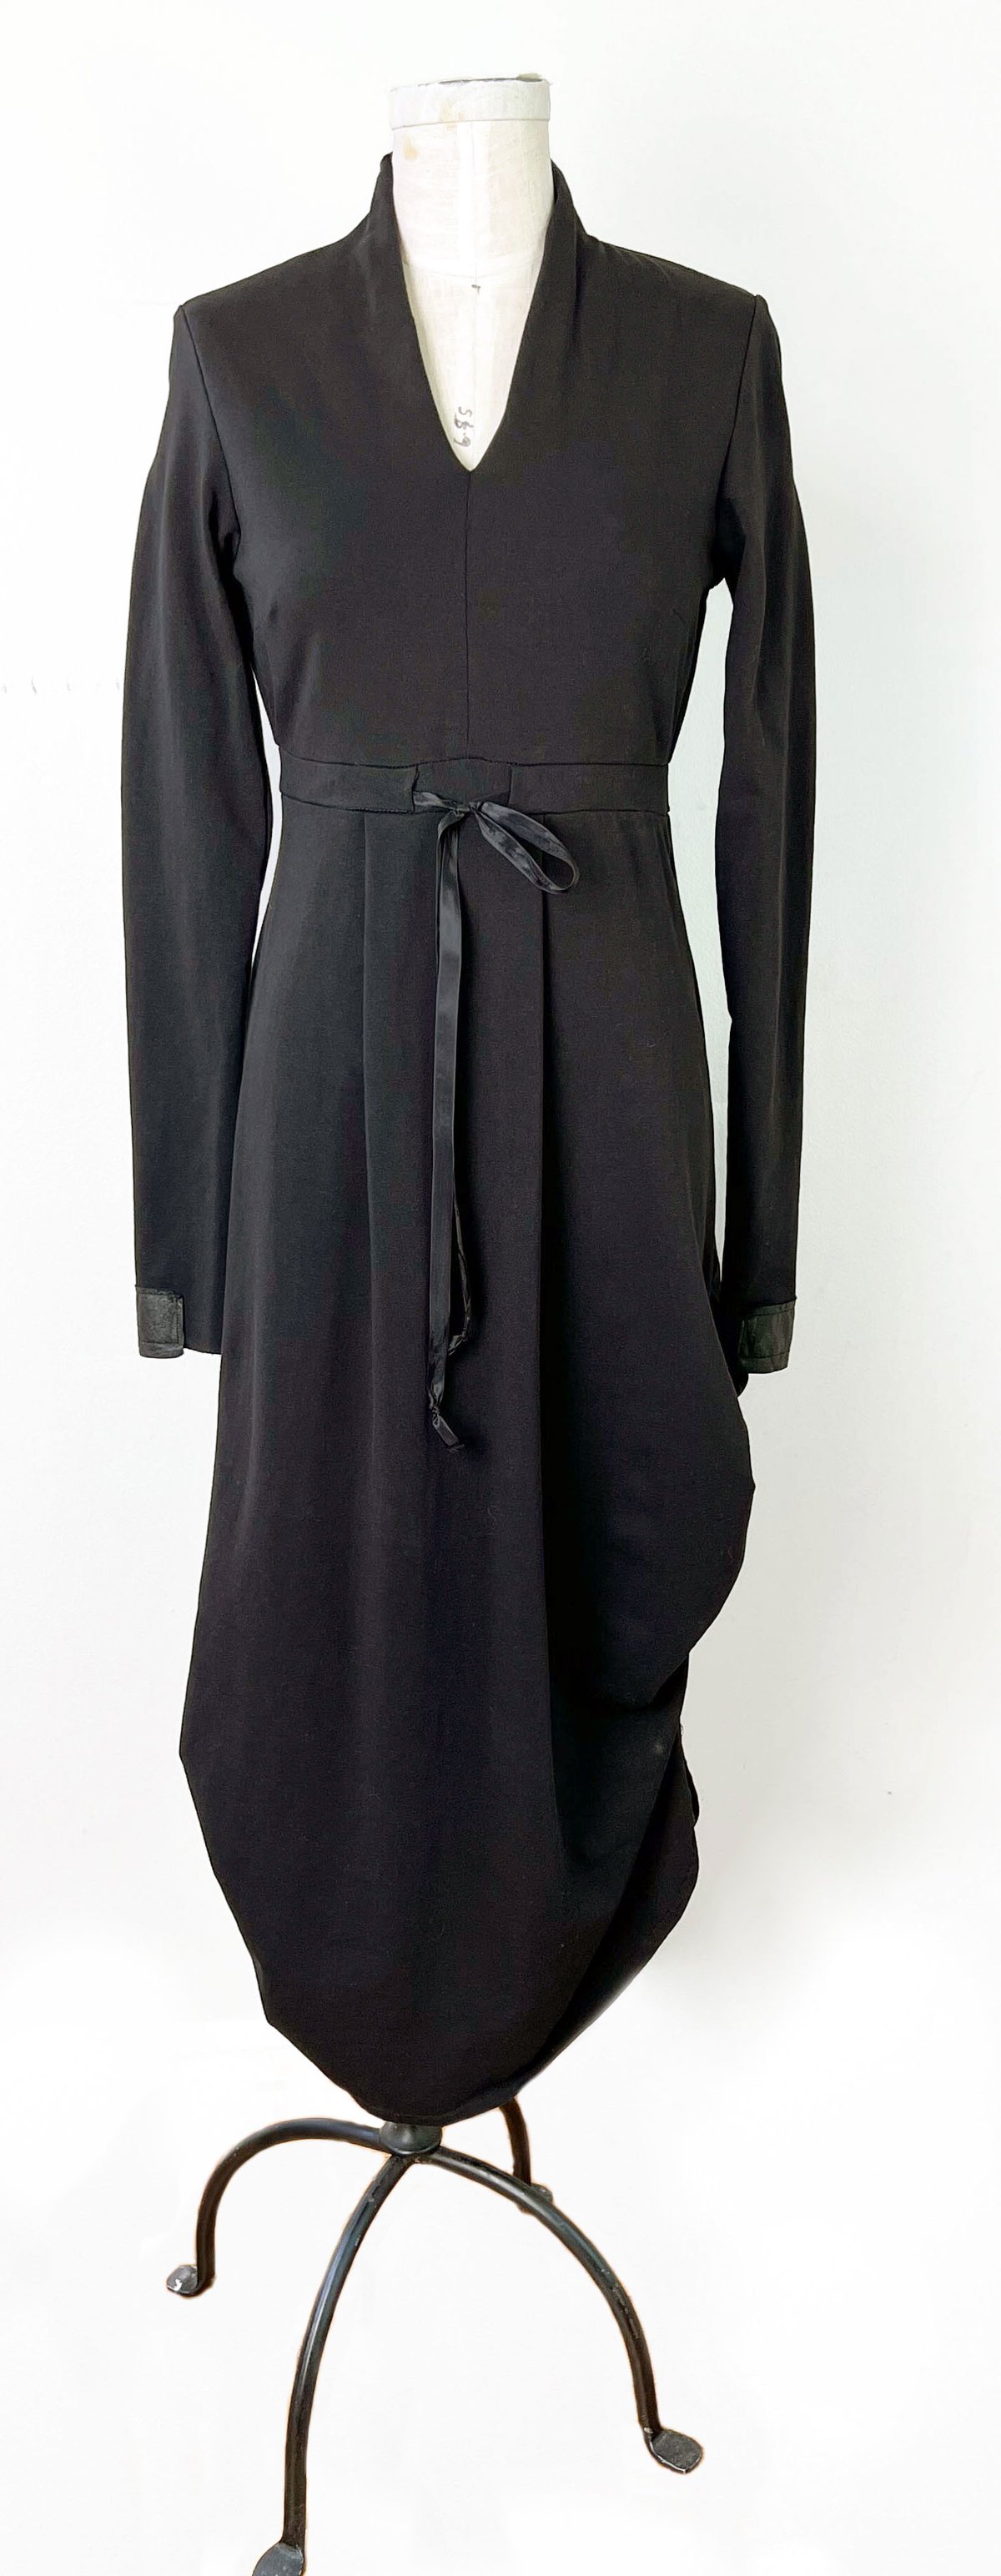 Image of Vista Dress in Black